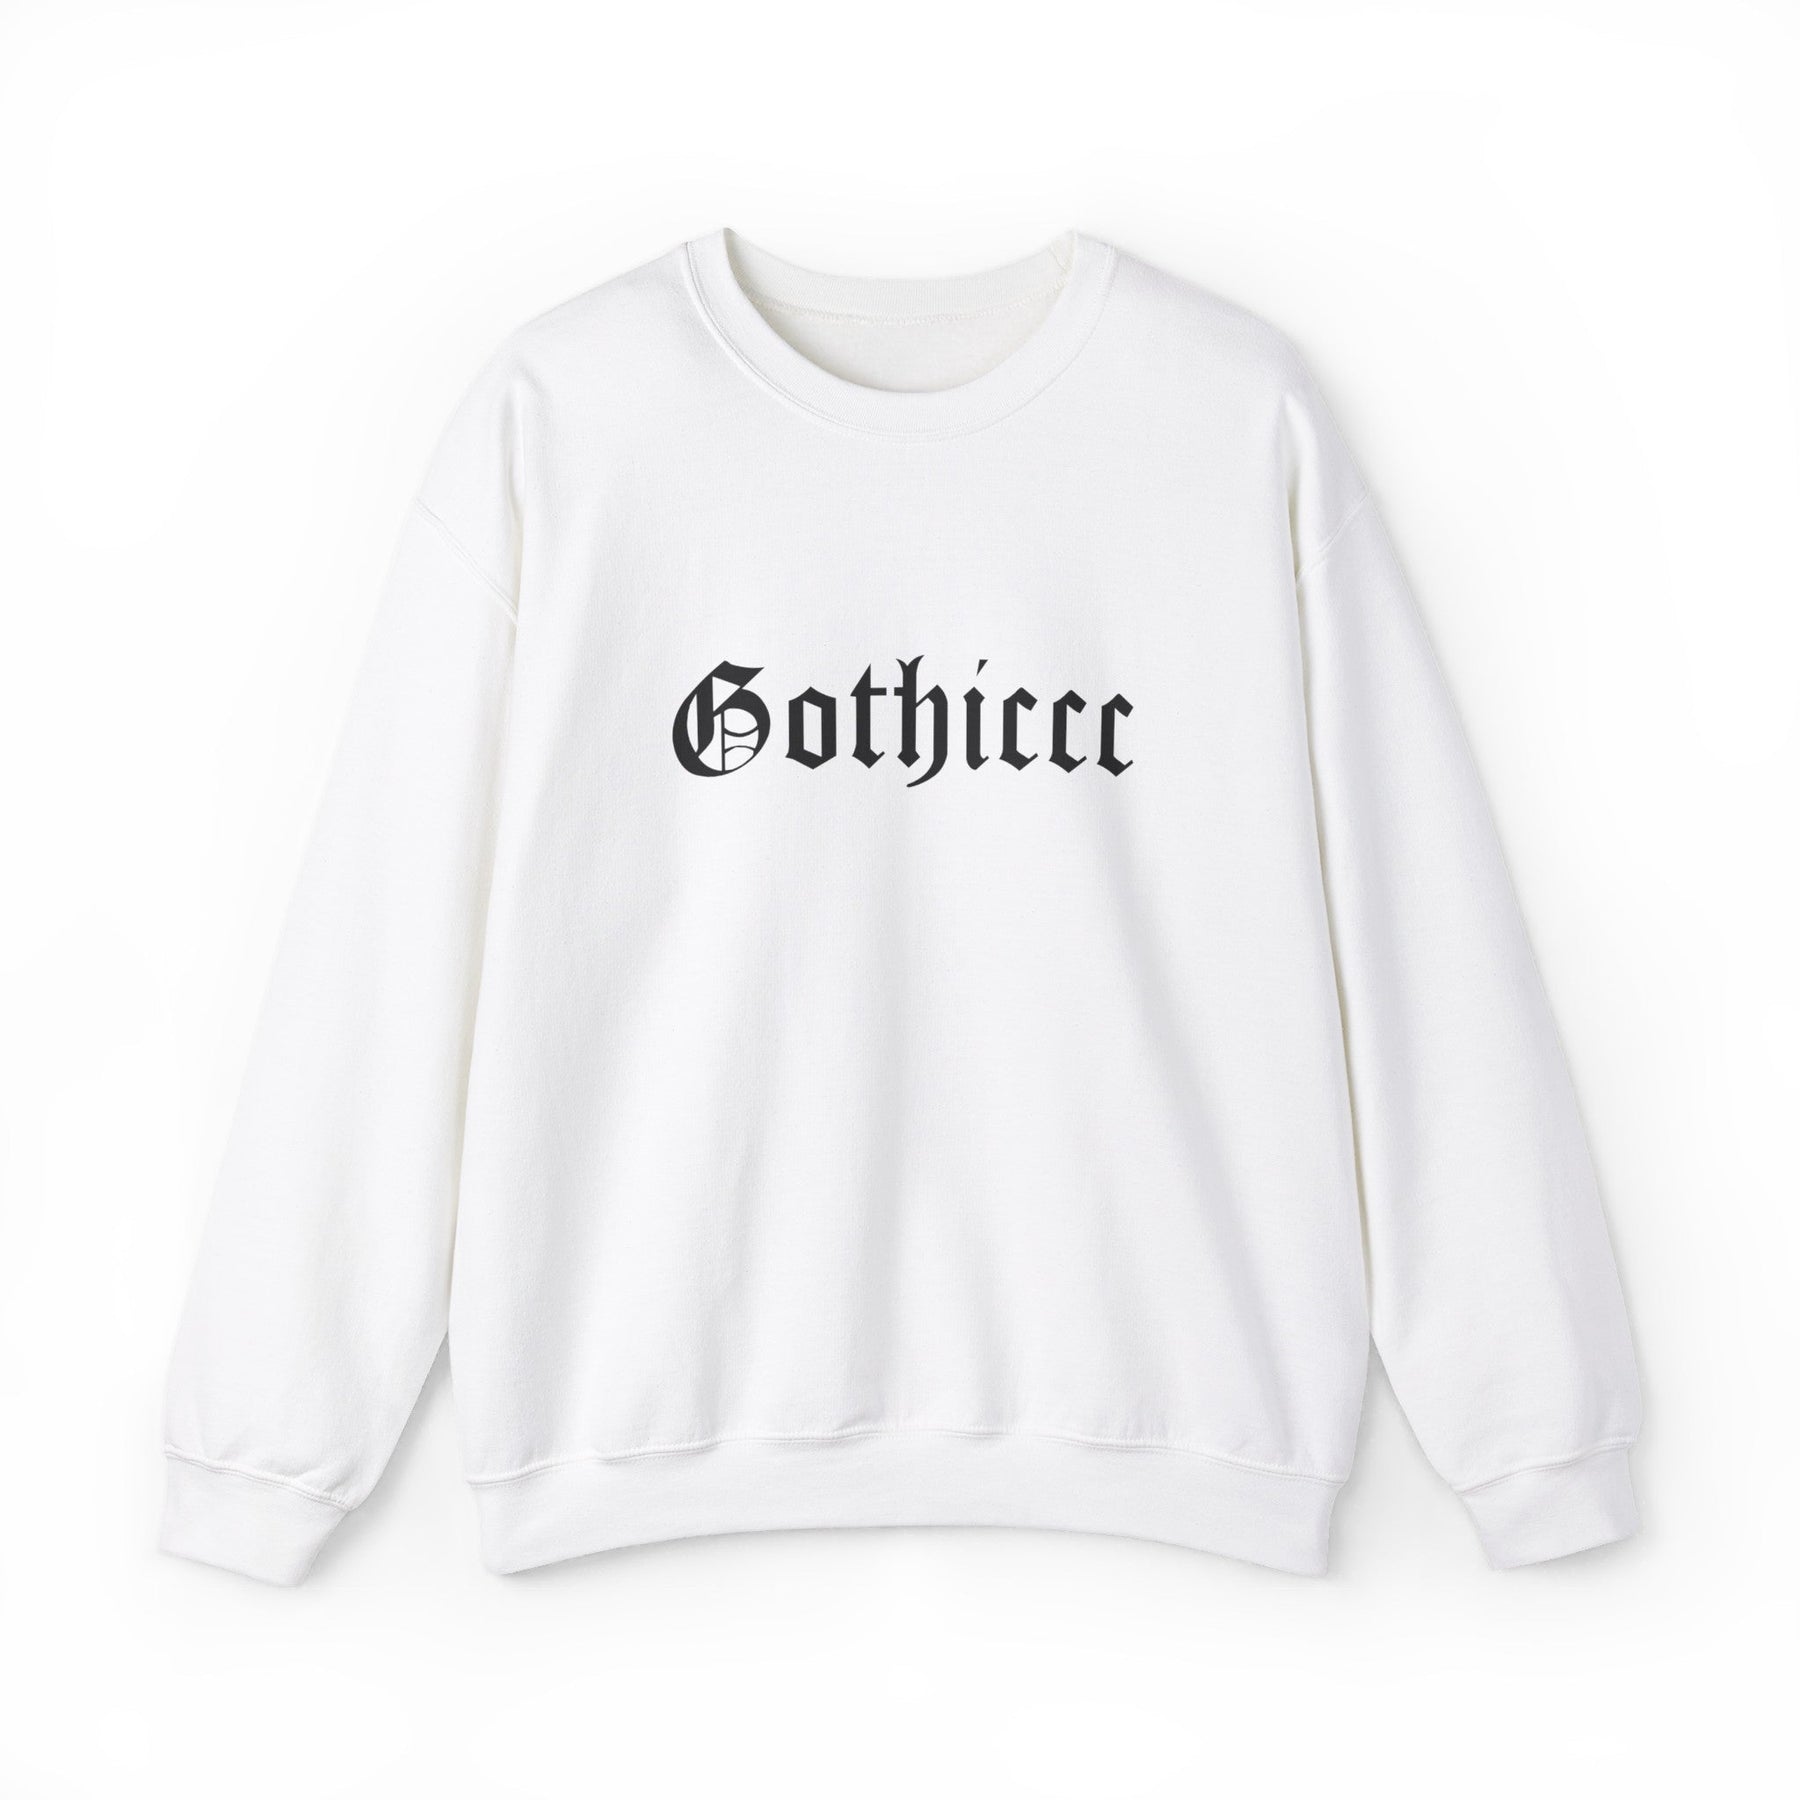 Gothiccc Long Sleeve Crew Neck Sweatshirt - Goth Cloth Co.Sweatshirt31758140580826856614